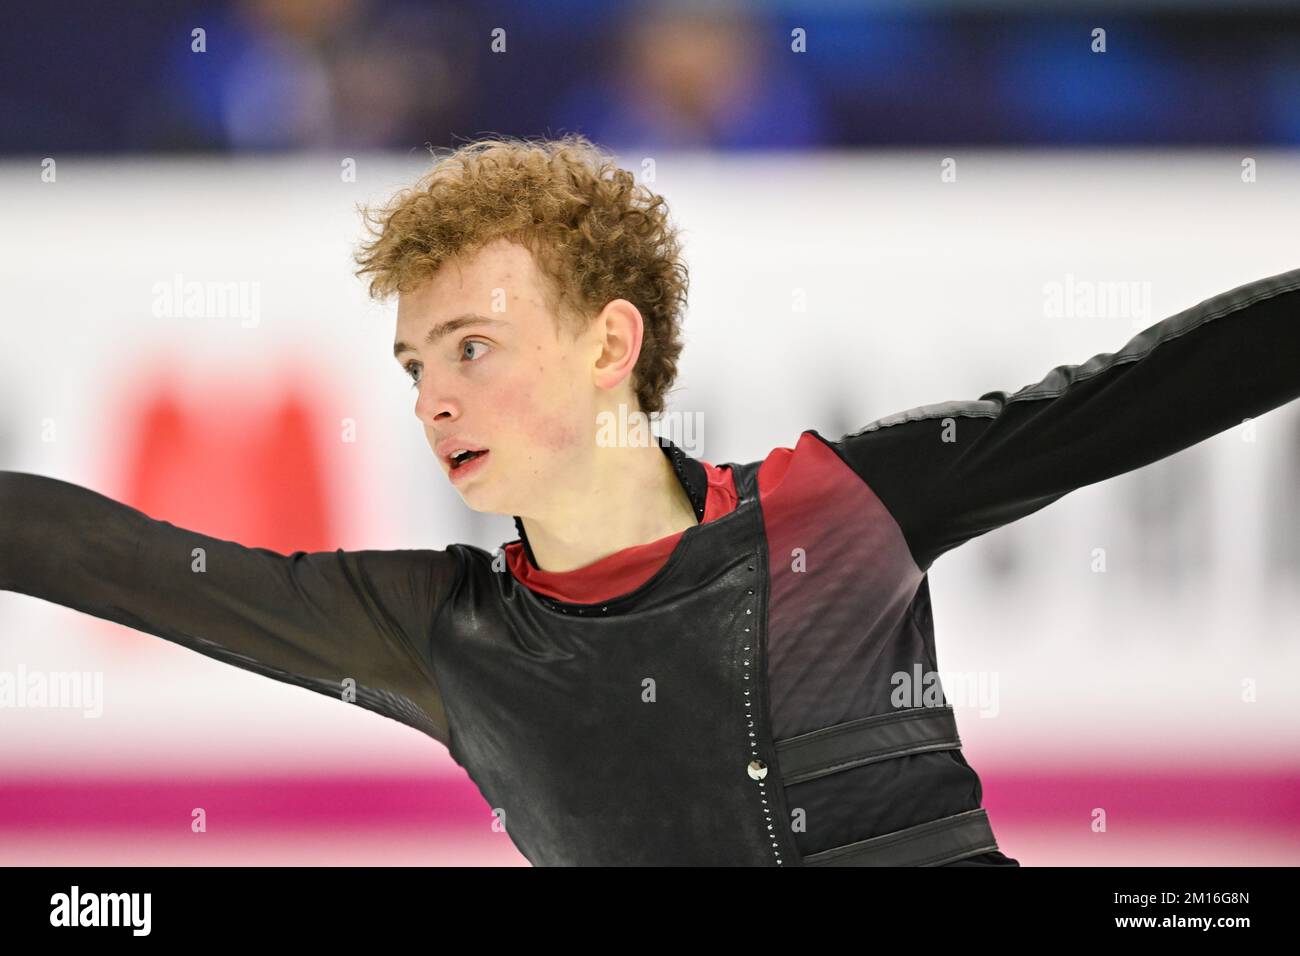 Robert YAMPOLSKY (USA), during Junior Men Free Skating, at the ISU Grand Prix of Figure Skating Final 2022, at Palavela, on December 10, 2022 in Torino, Italy